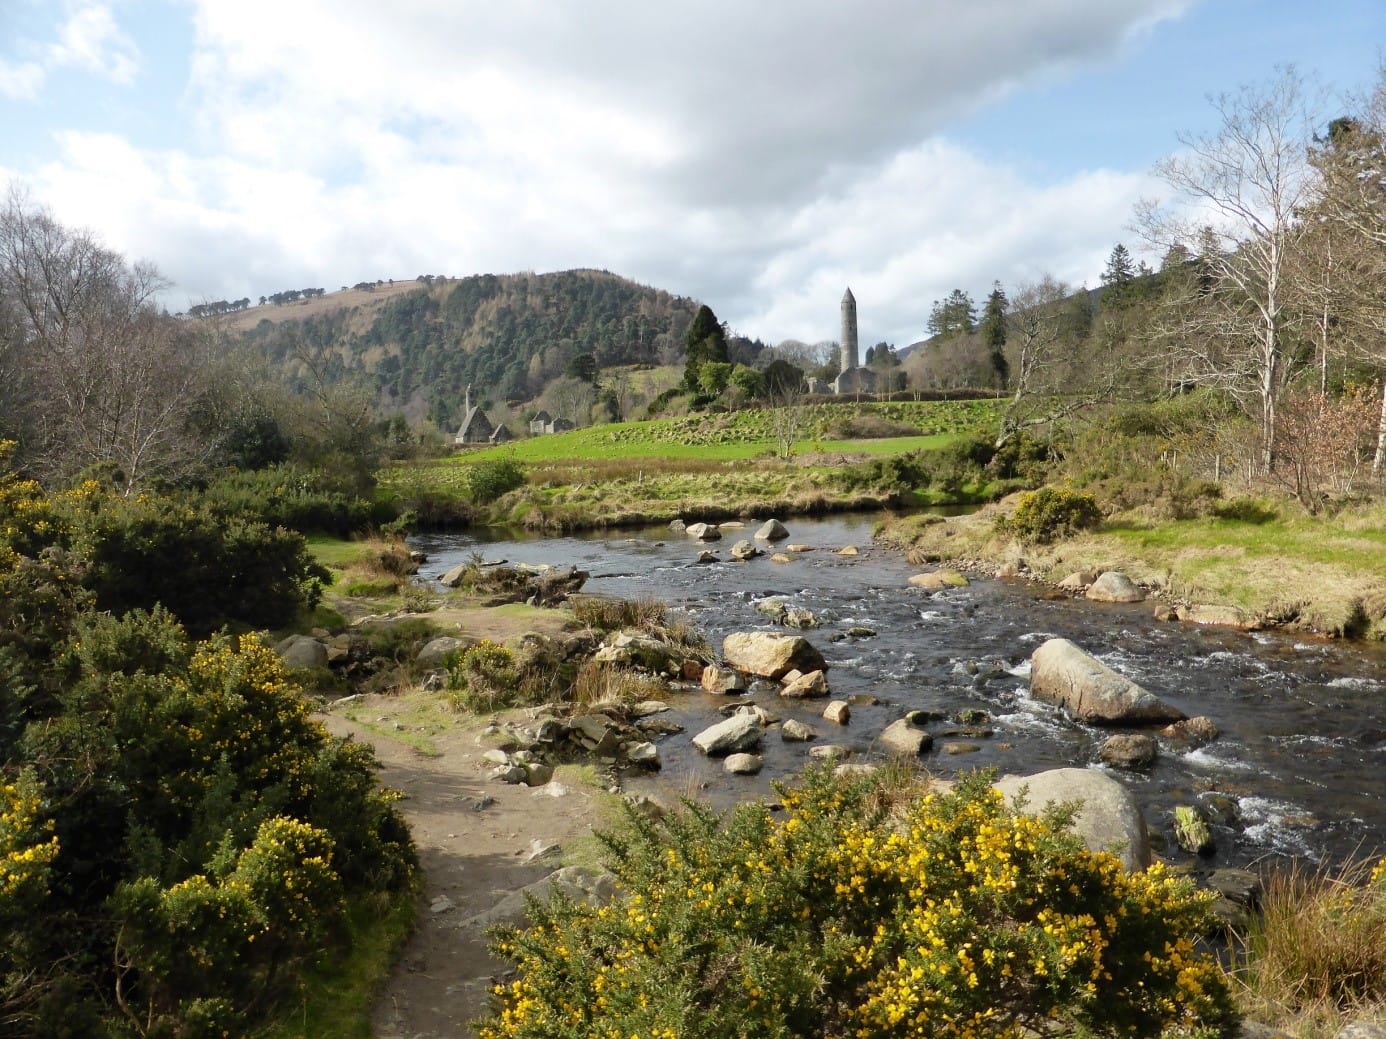 View approaching the Glendalough Monastic village